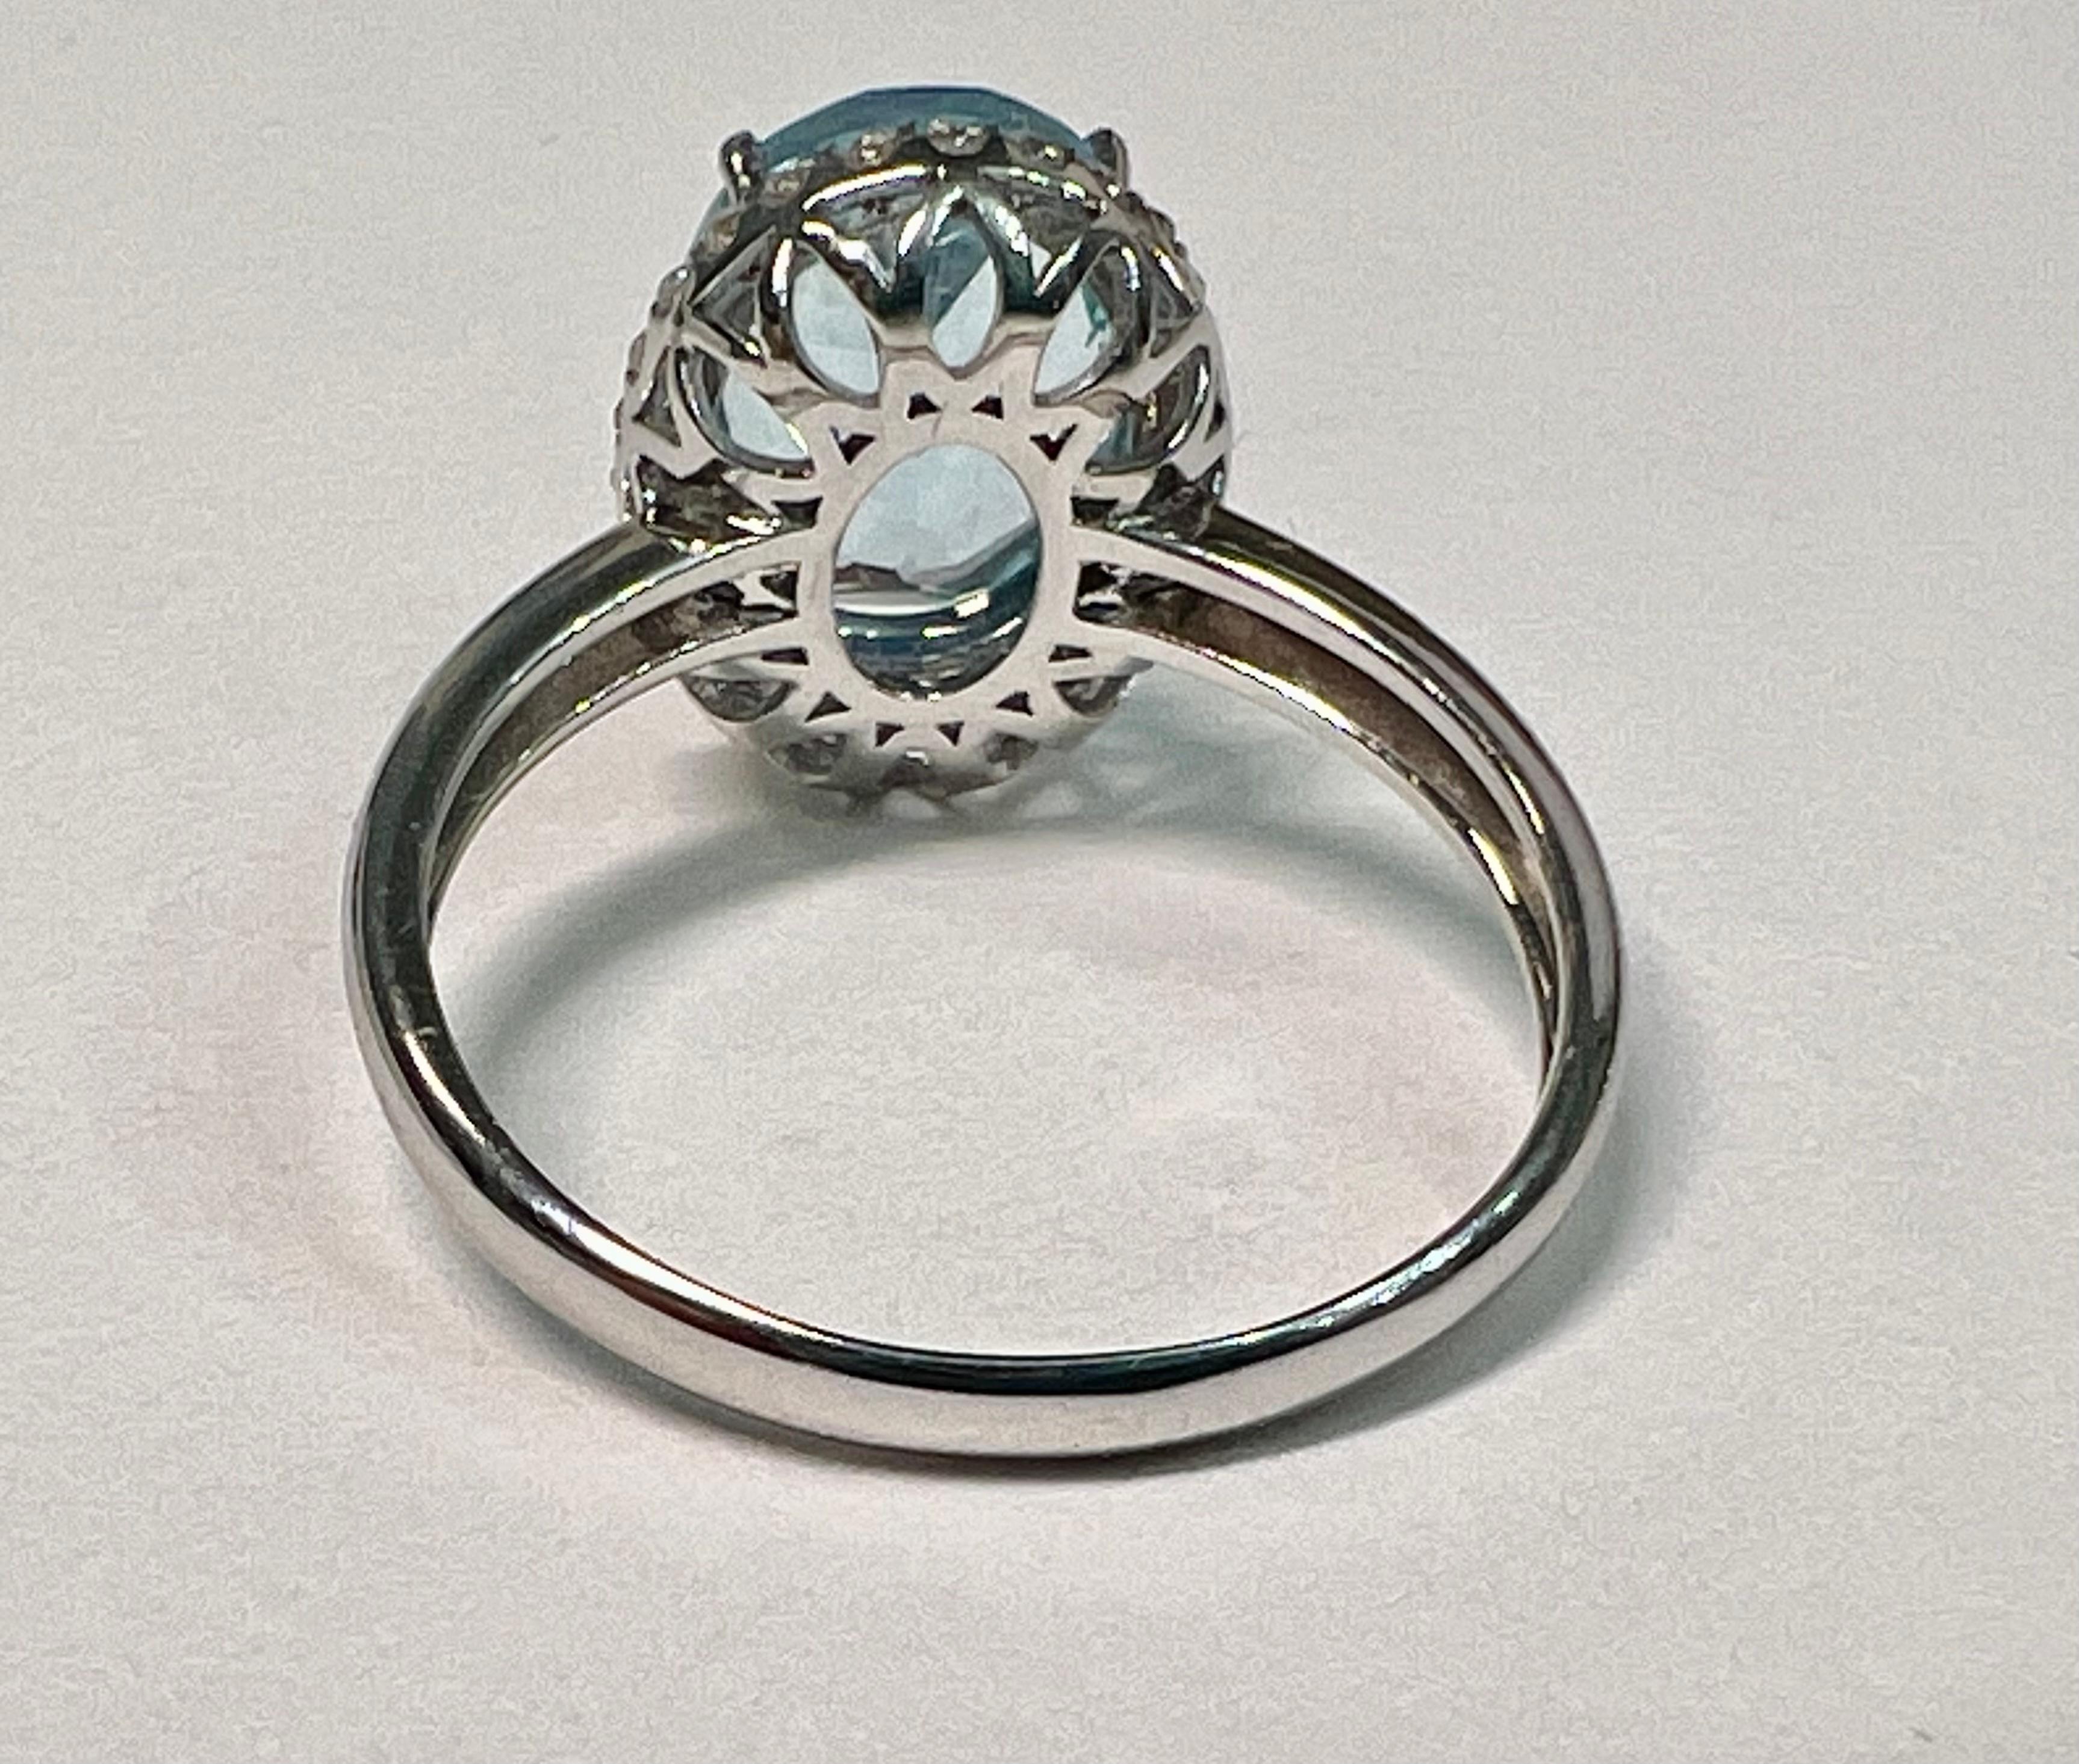 Blue Topaz and Diamond Halo Ring, 10k White Gold 2